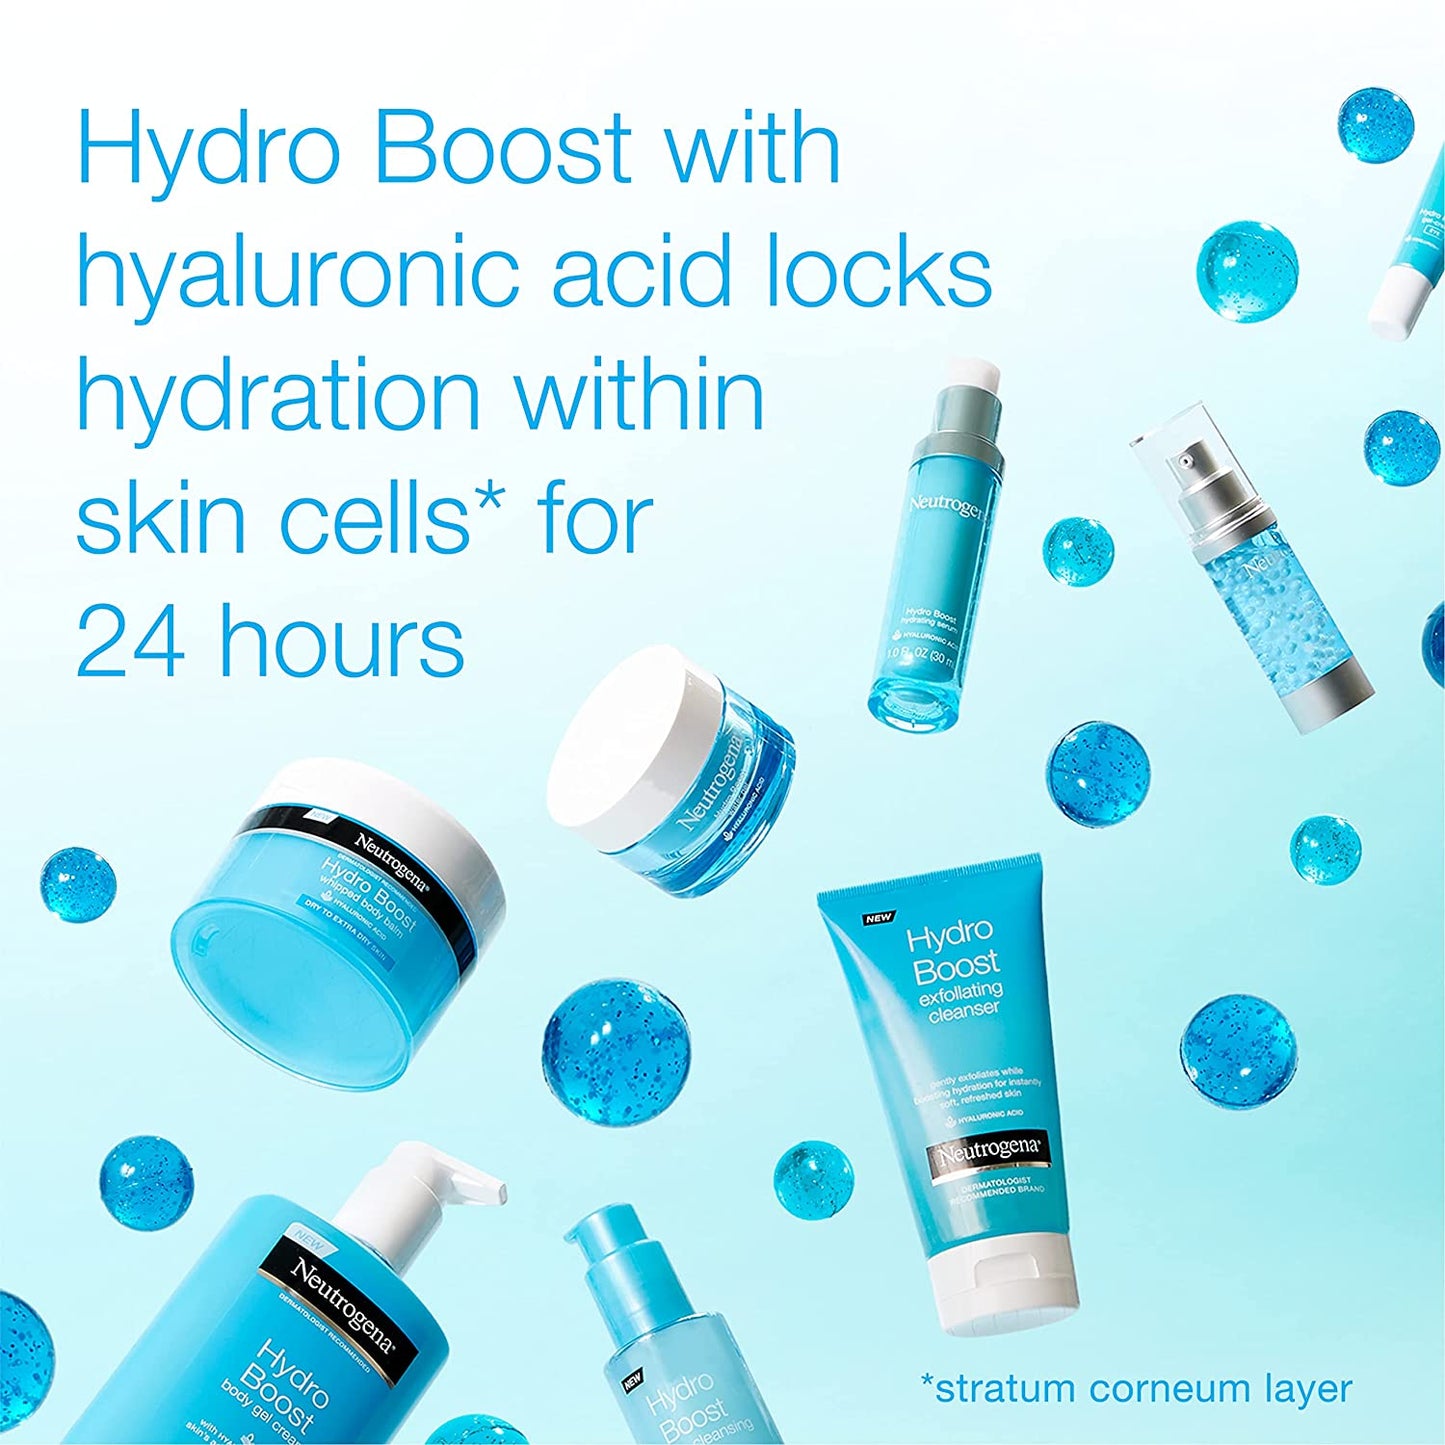 Neutrogena Hydro Boost Face Moisturizer with Hyaluronic Acid